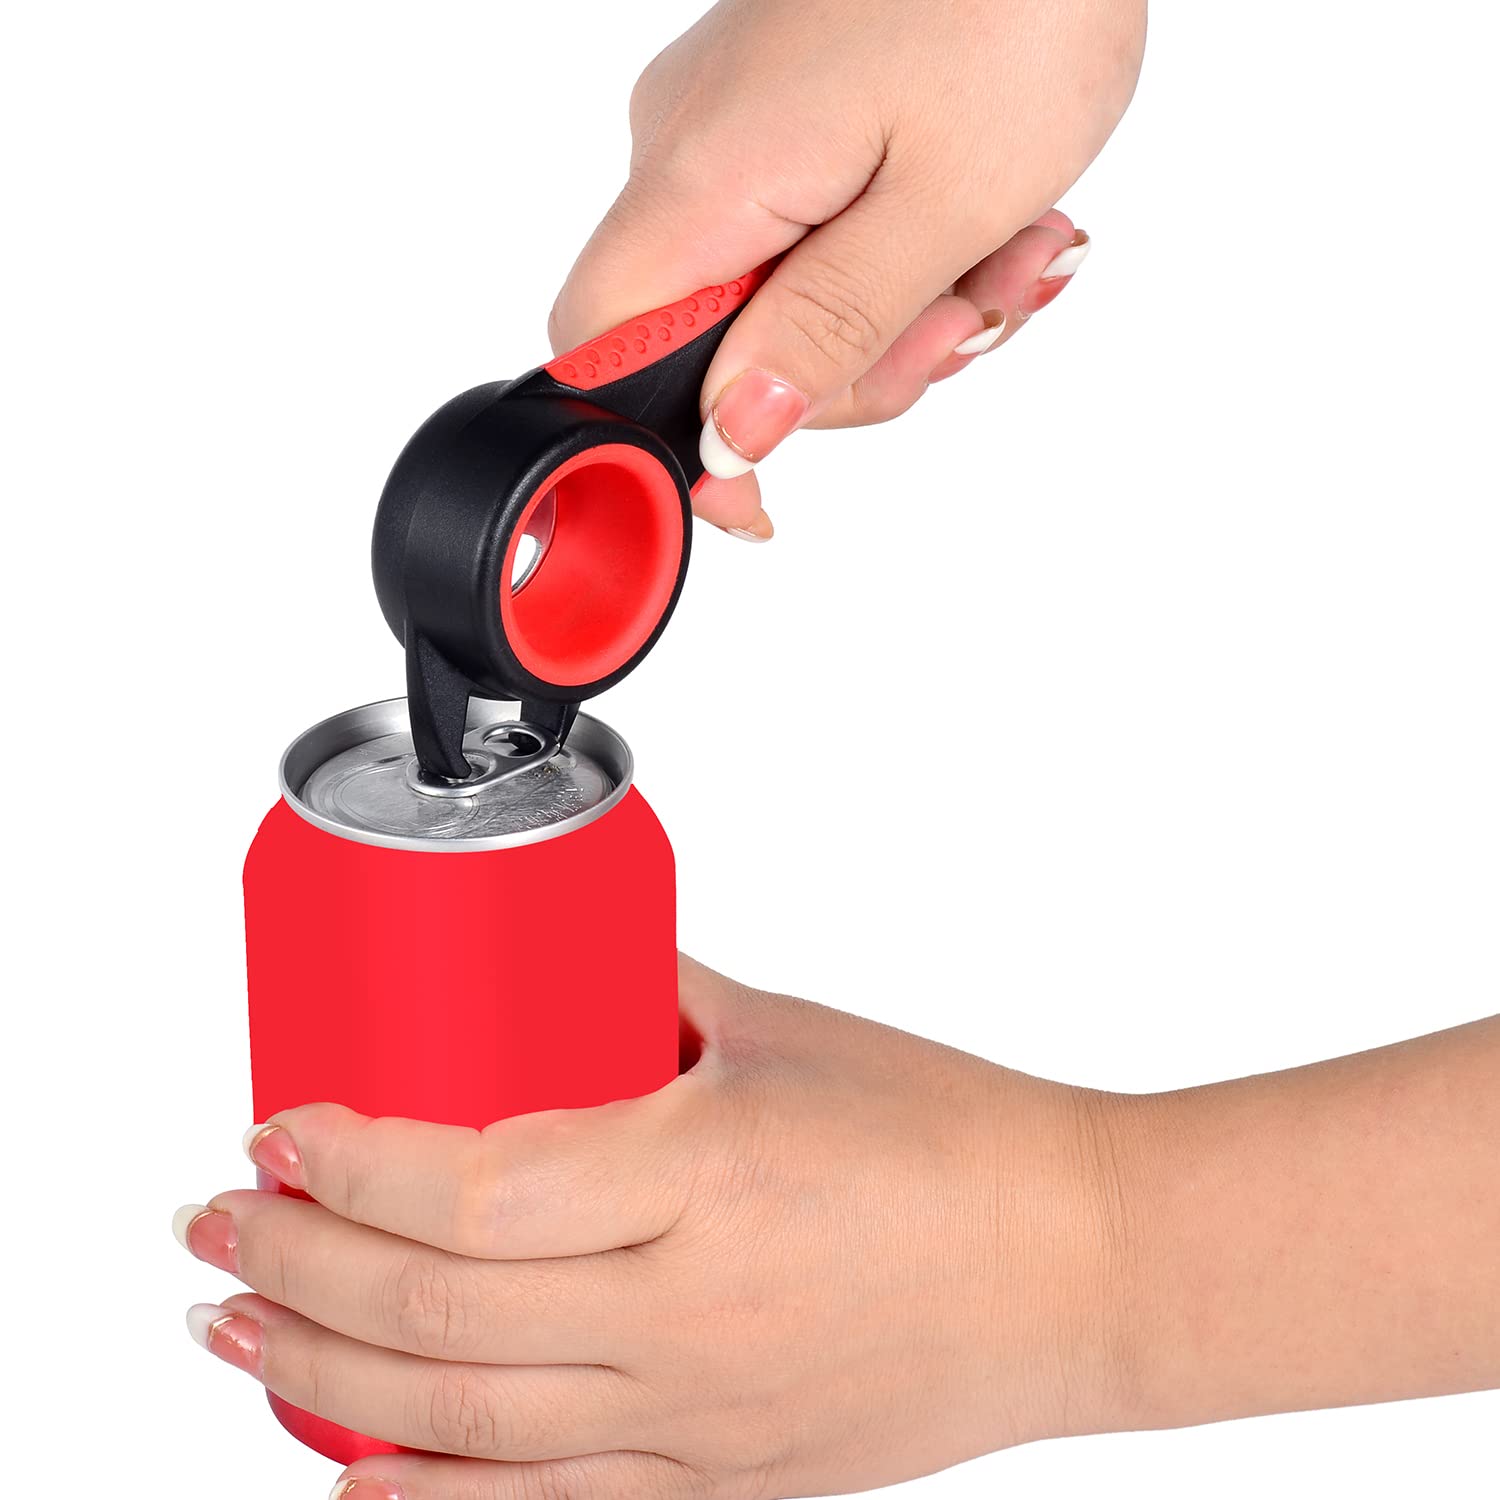 Kichwit Jar Opener for Weak Hands, Bottle Opener, Easy to Use (Red & Black)